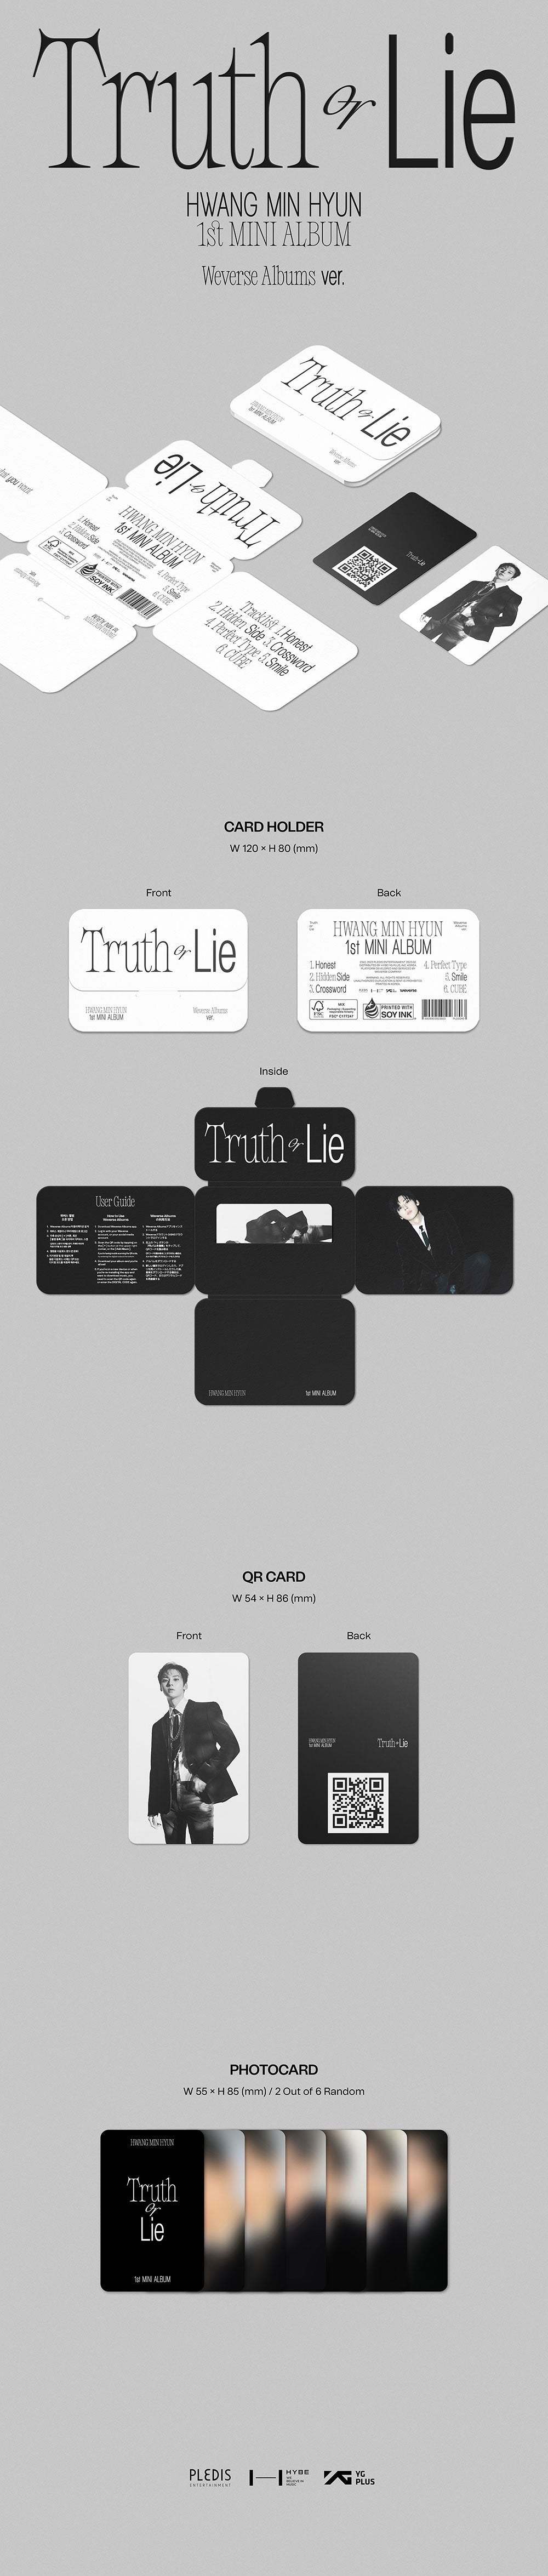 HWANG MIN HYUN - Truth or Lie (1st Mini Album) Weverse Album Ver.